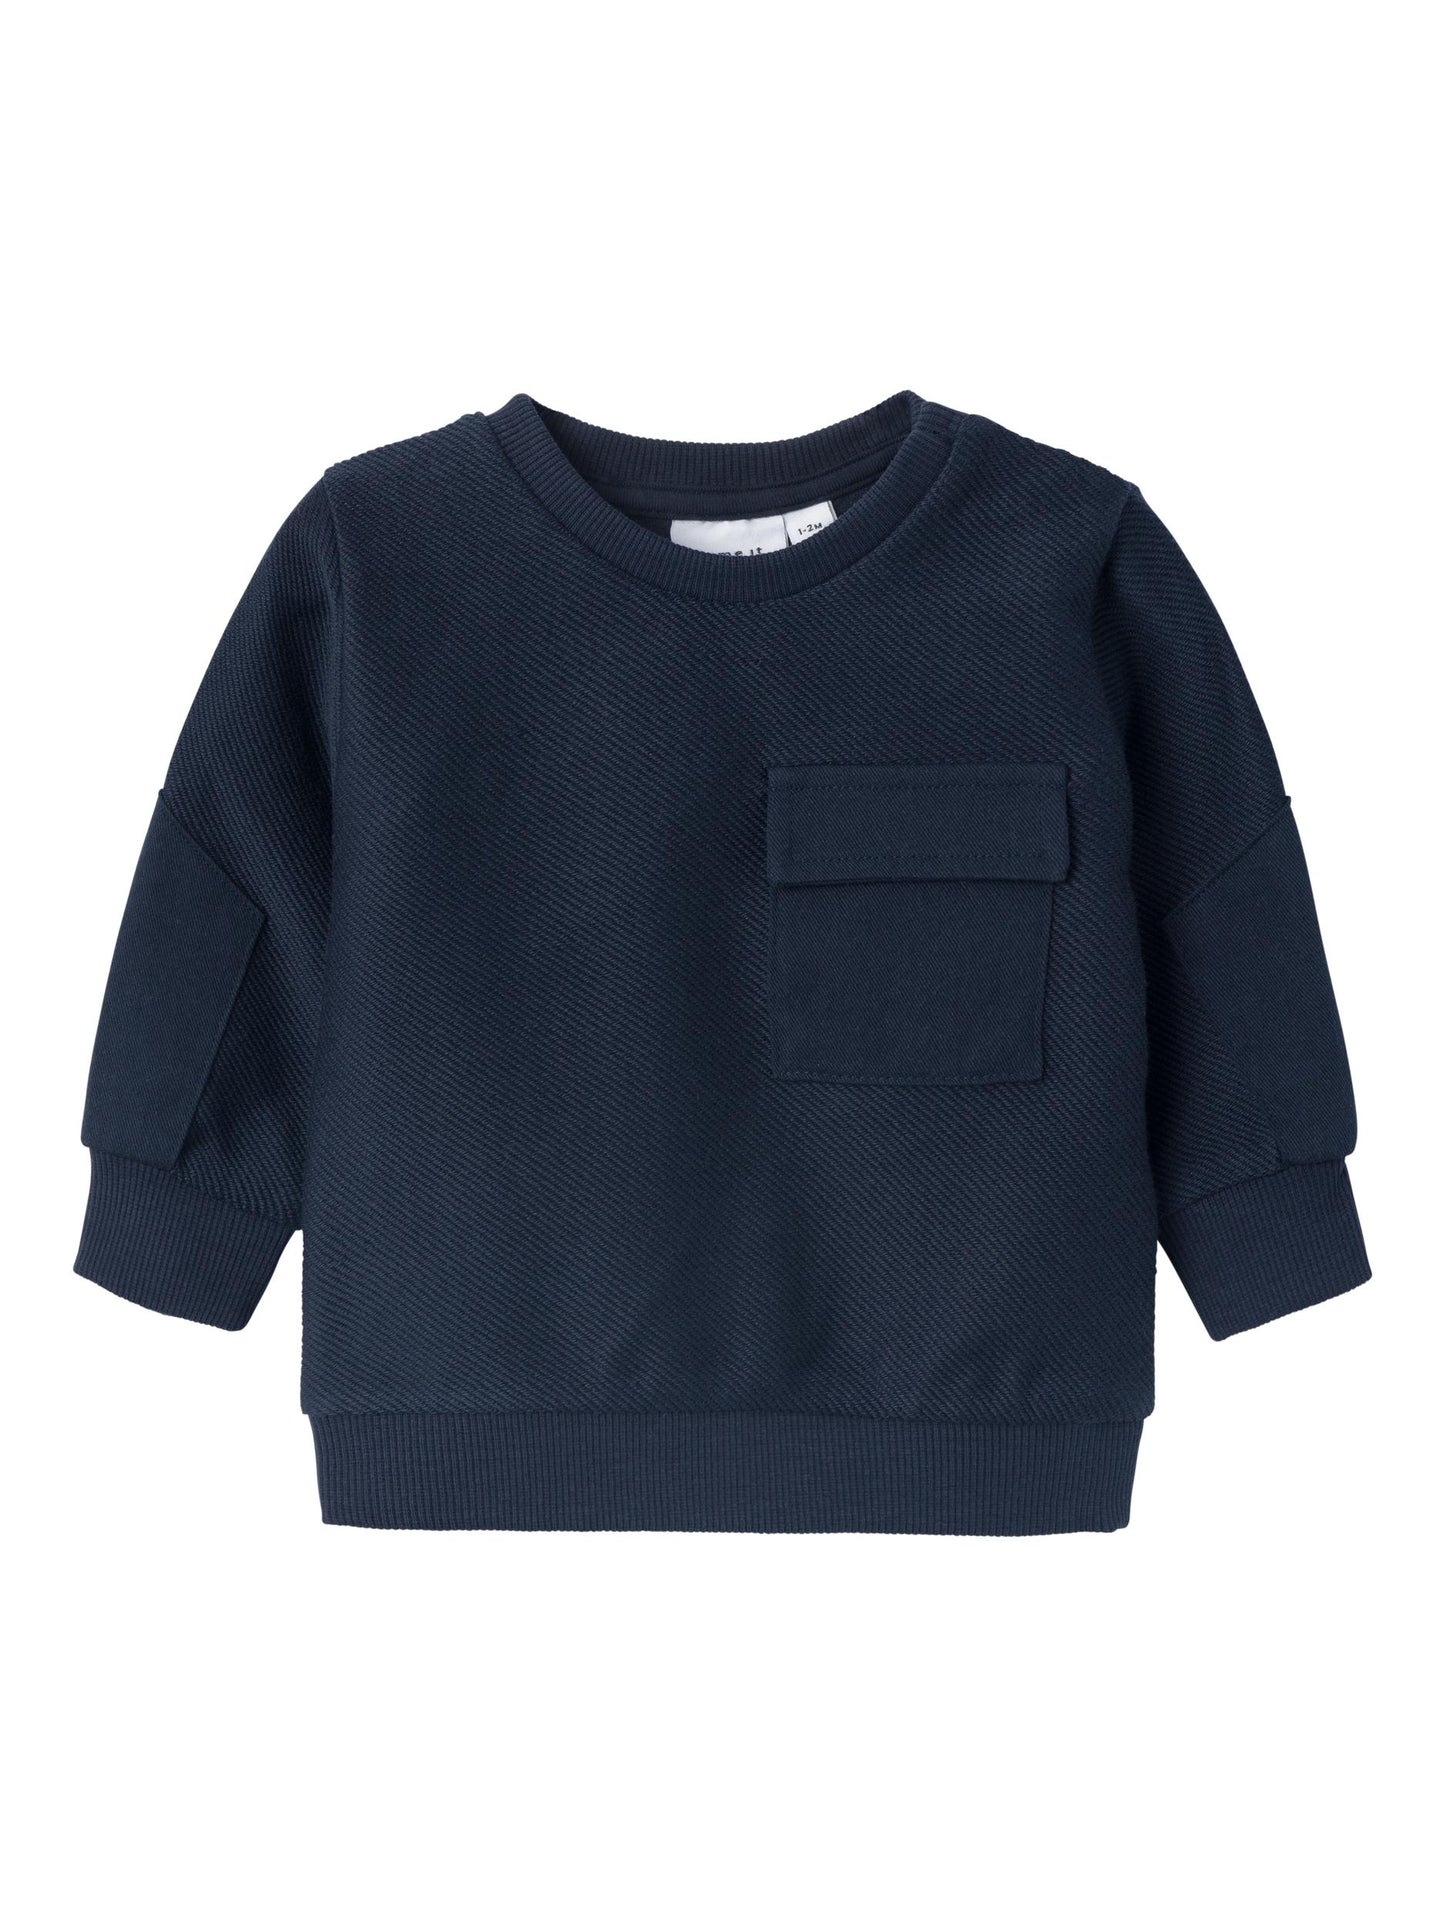 Name it - sweater pocket - dark saphire